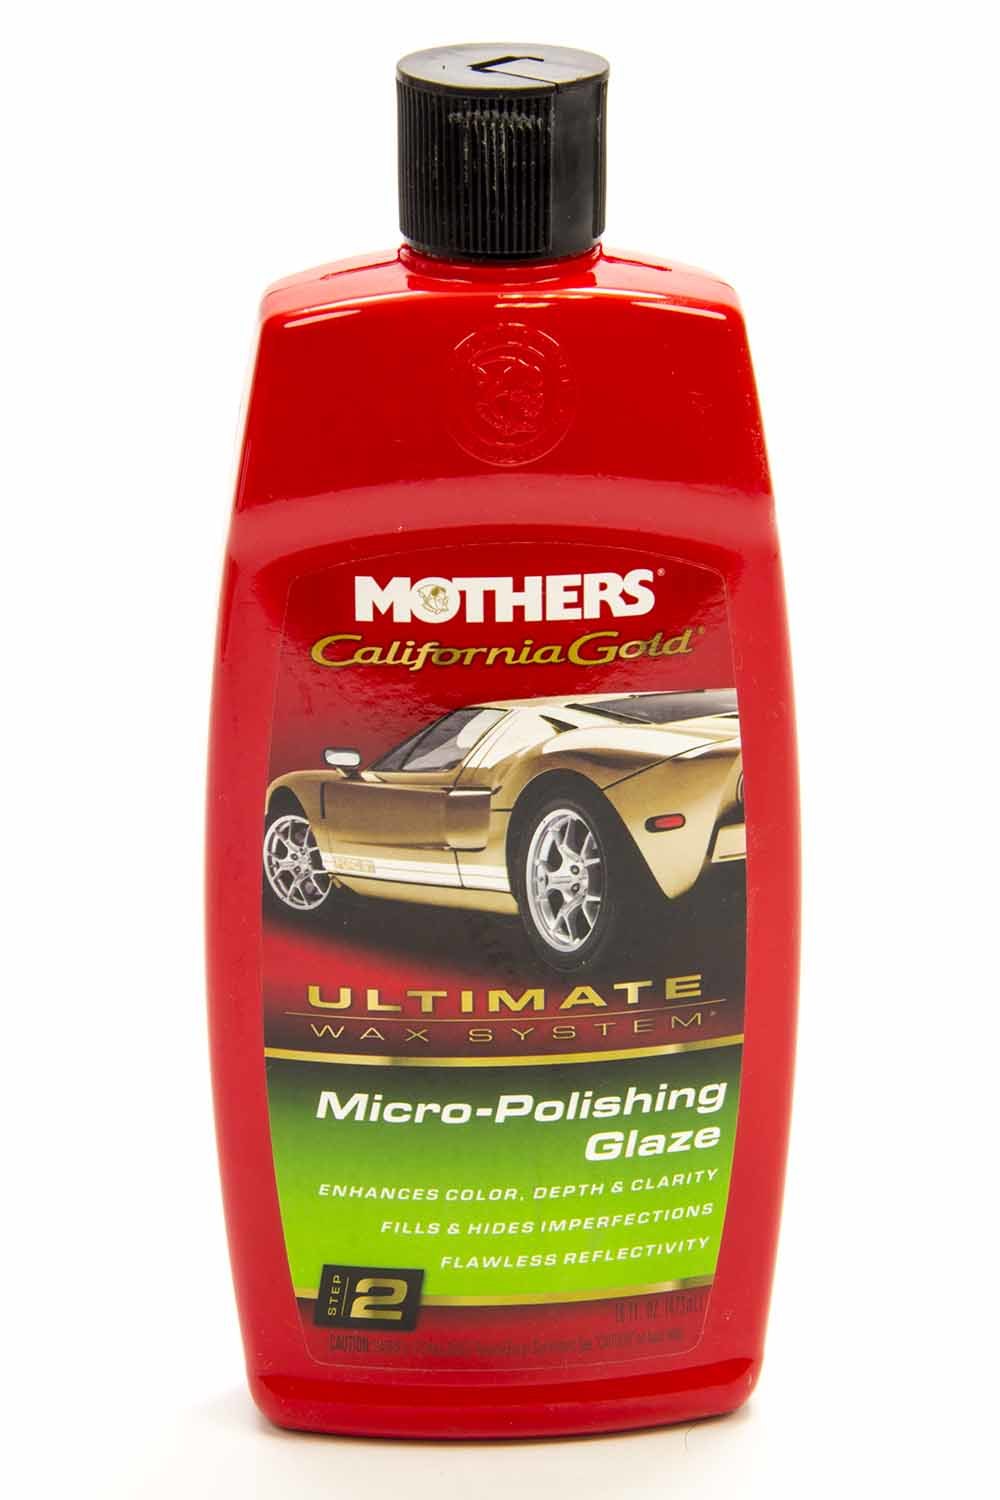 MOTHERS Finish Polish, California Gold Micro Polishing Glaze, 16.00 oz Bottle, Each